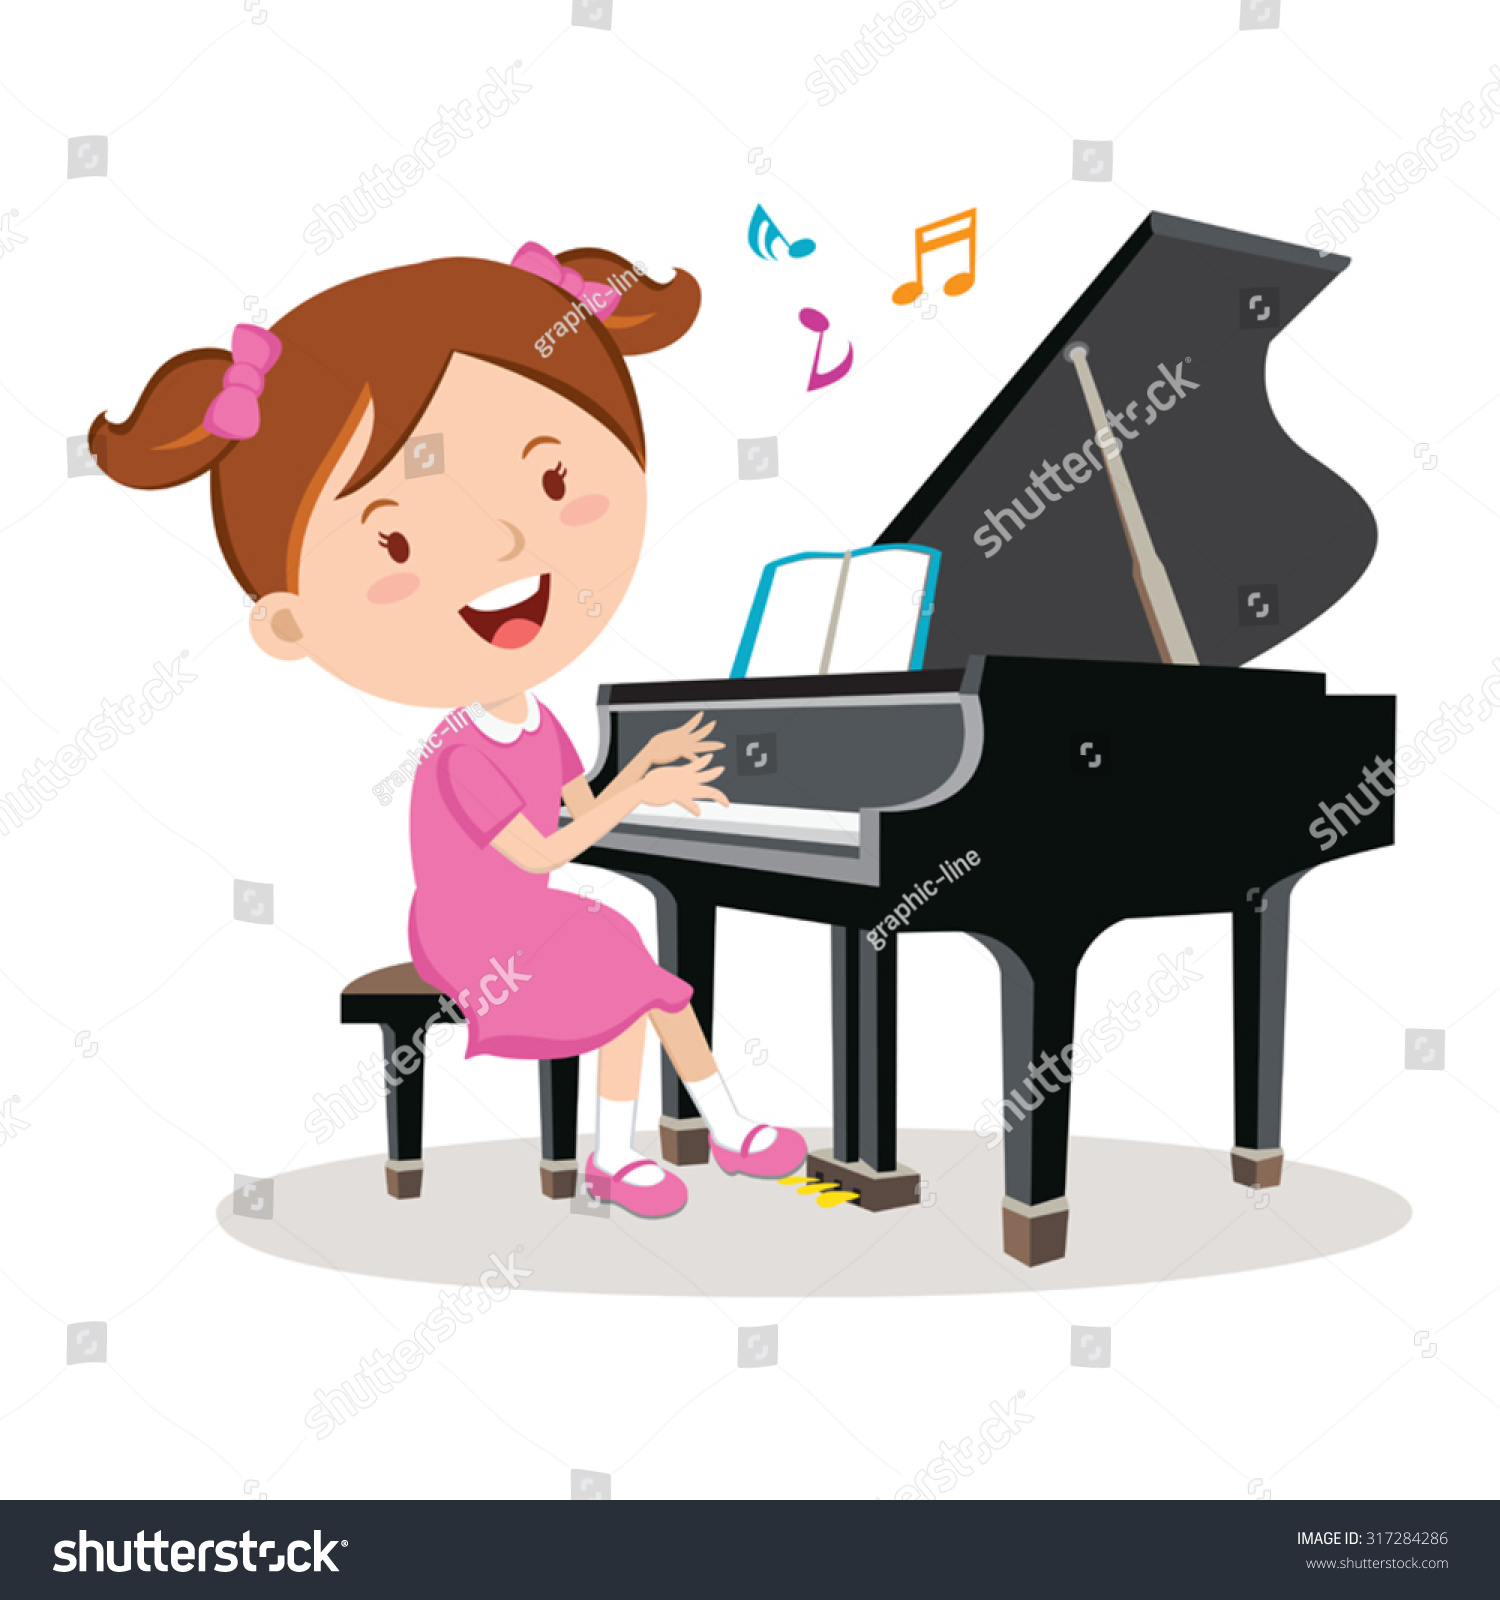 Does he play the piano. Профессия пианист для детей. Пианист рисунок. Пианист мультяшный. Играет на фортепиано.